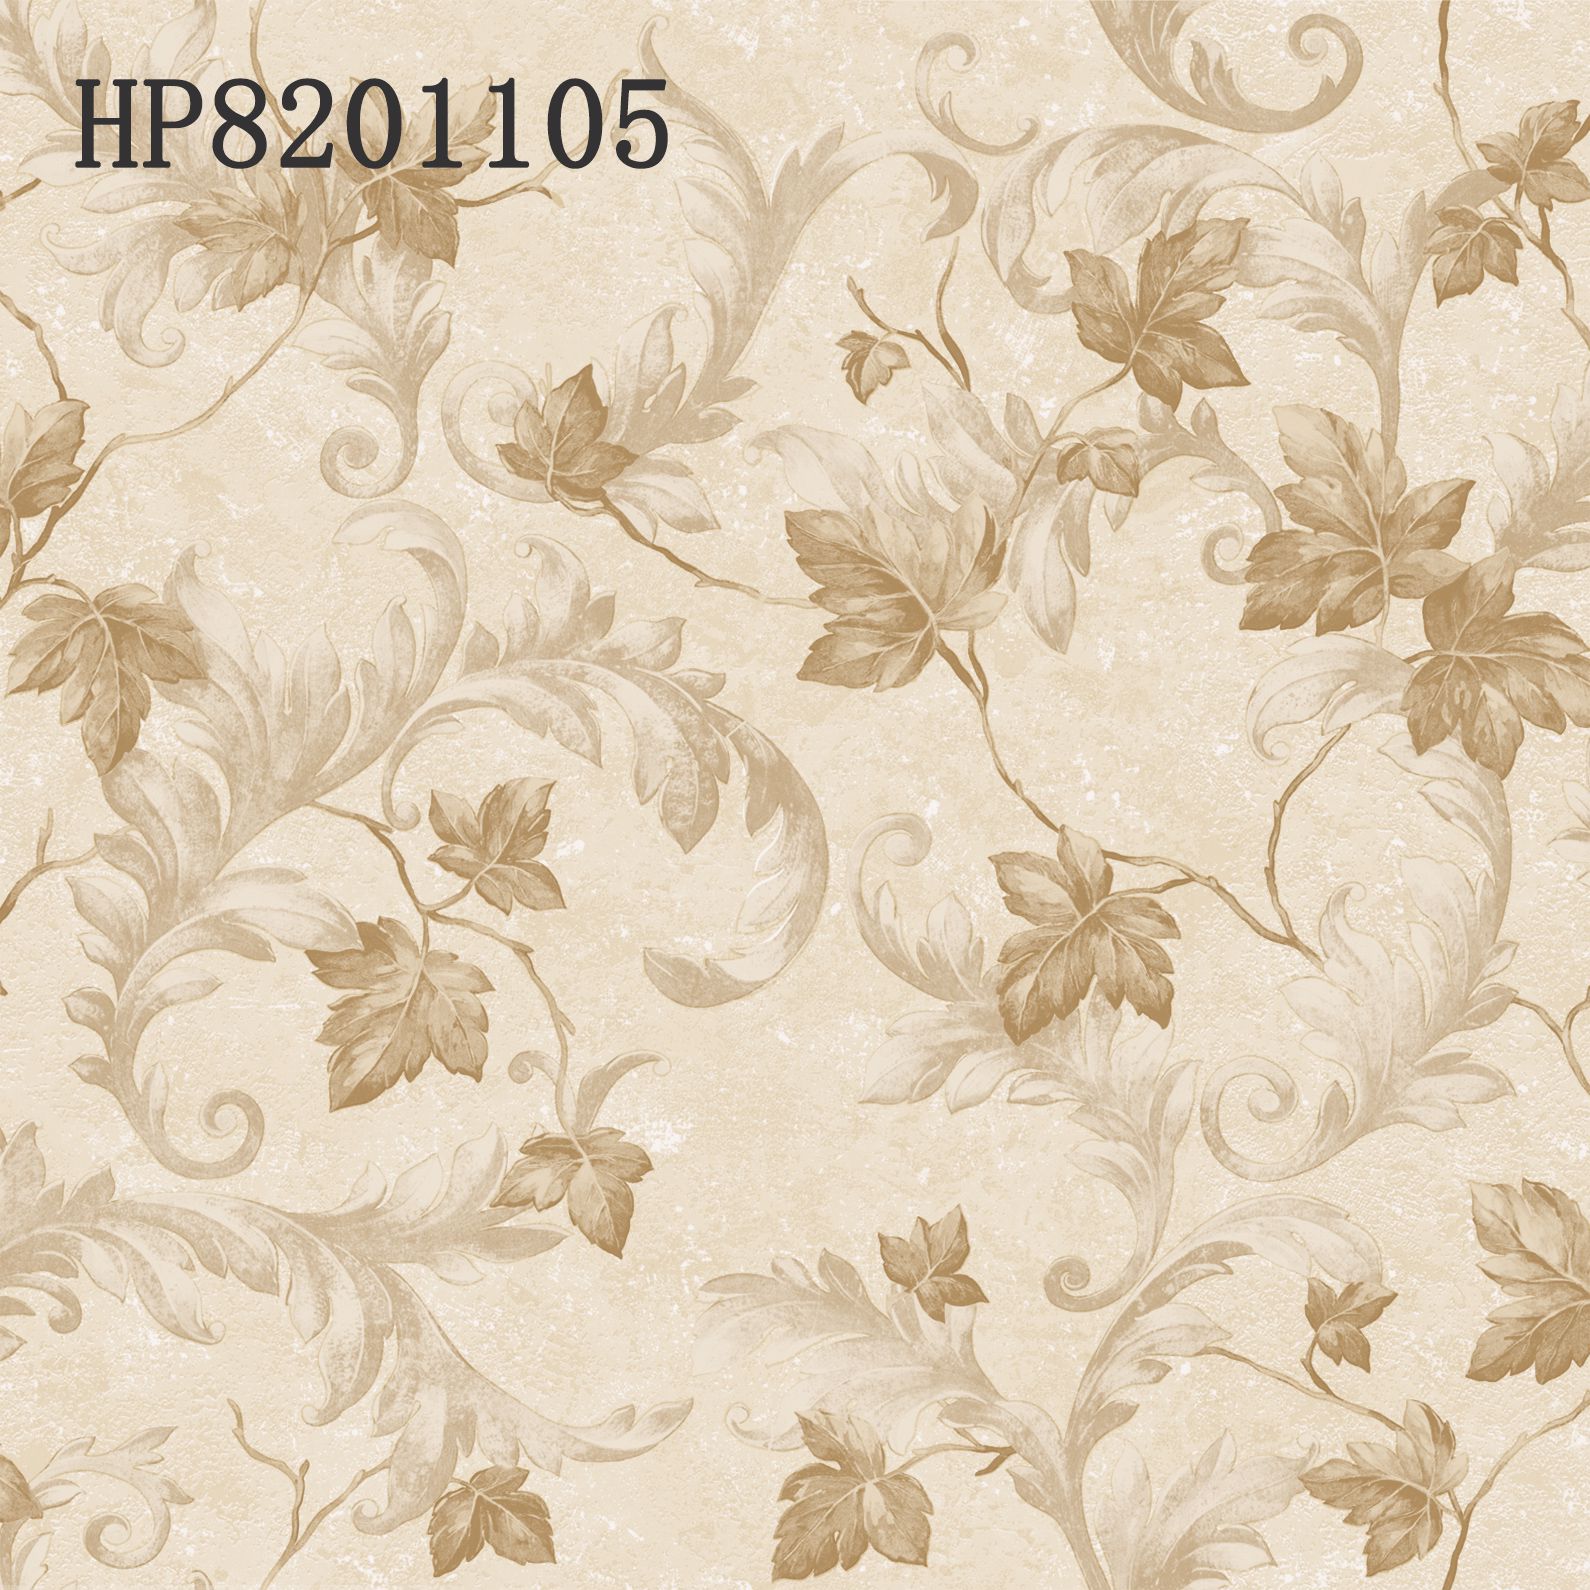 Environment-friendly Pvc Wallpapers HP82001105